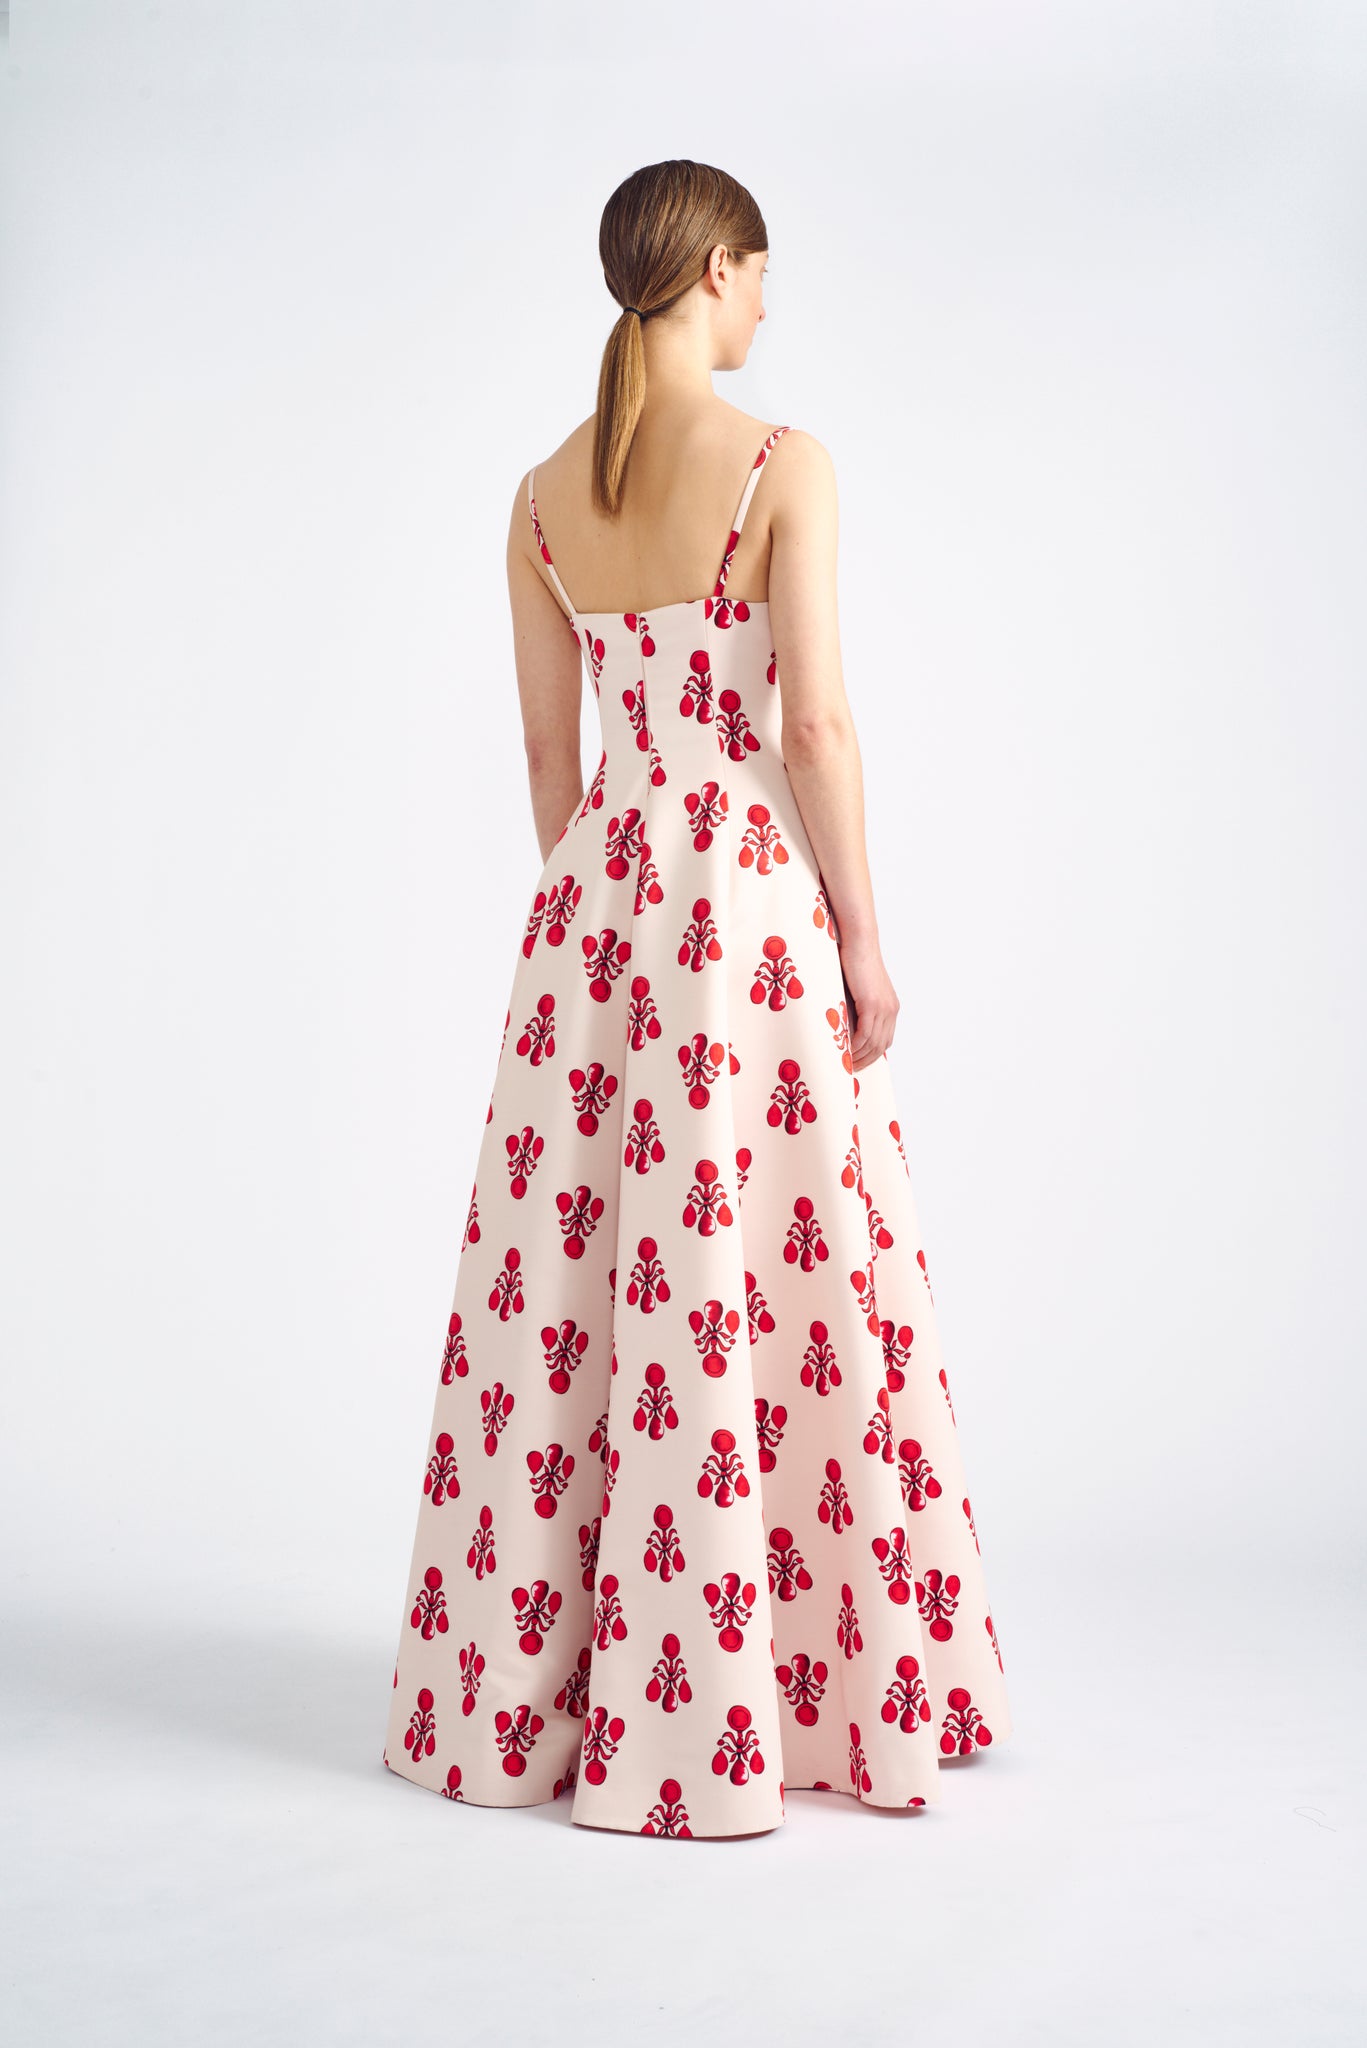 Oceana Gown: Pink and Red Jewel Print Evening Dress | Emilia Wickstead